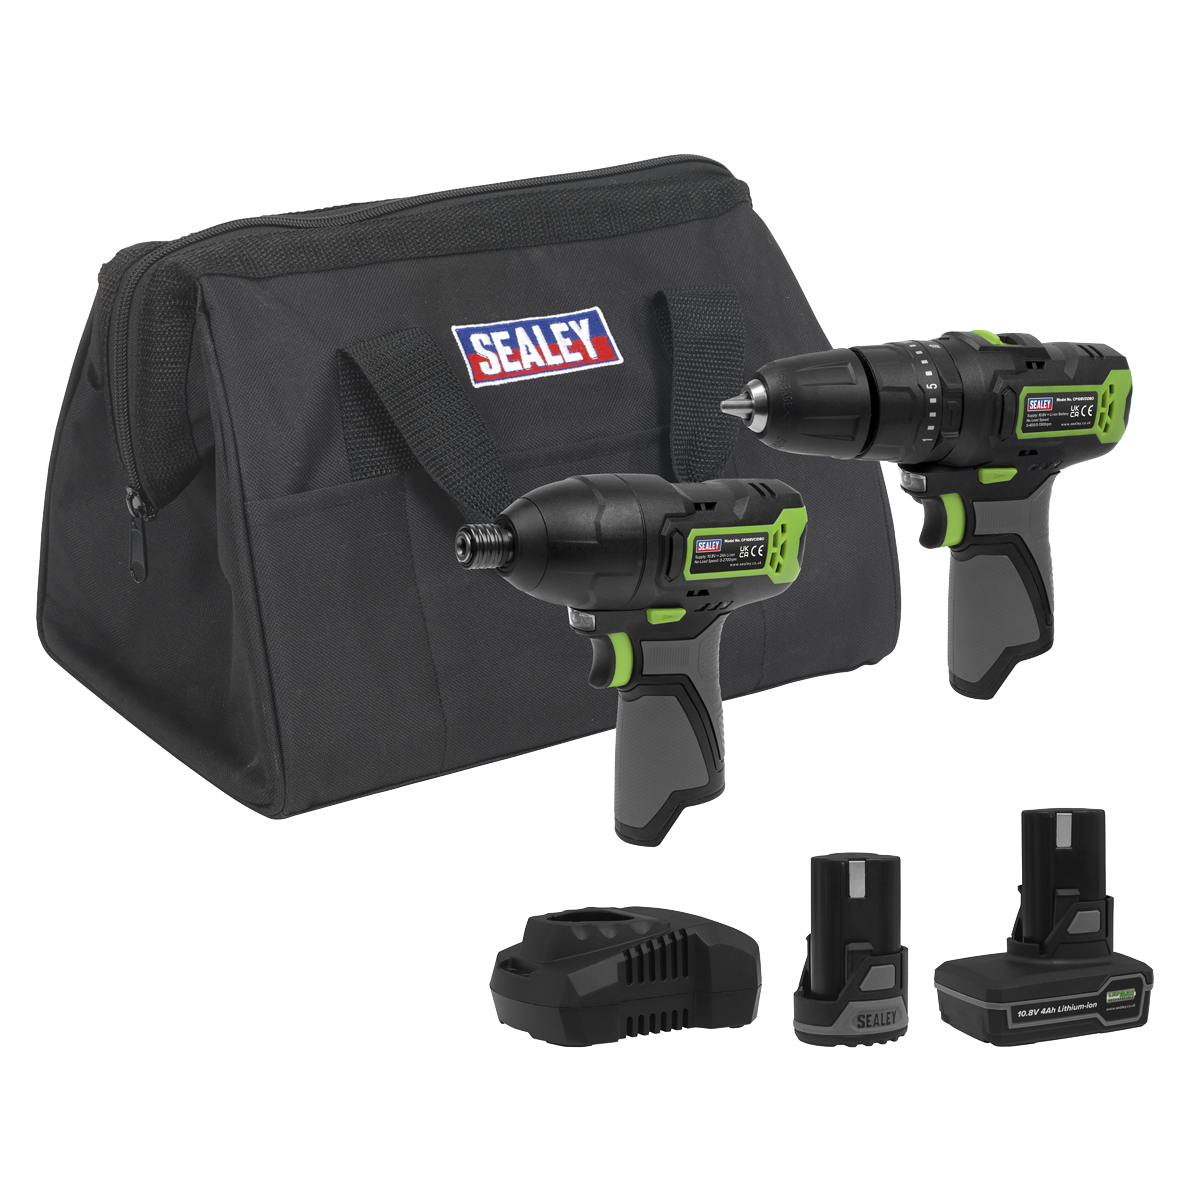 Sealey 2 x 10.8V SV10.8 Series Combi Drill & Impact Driver Kit